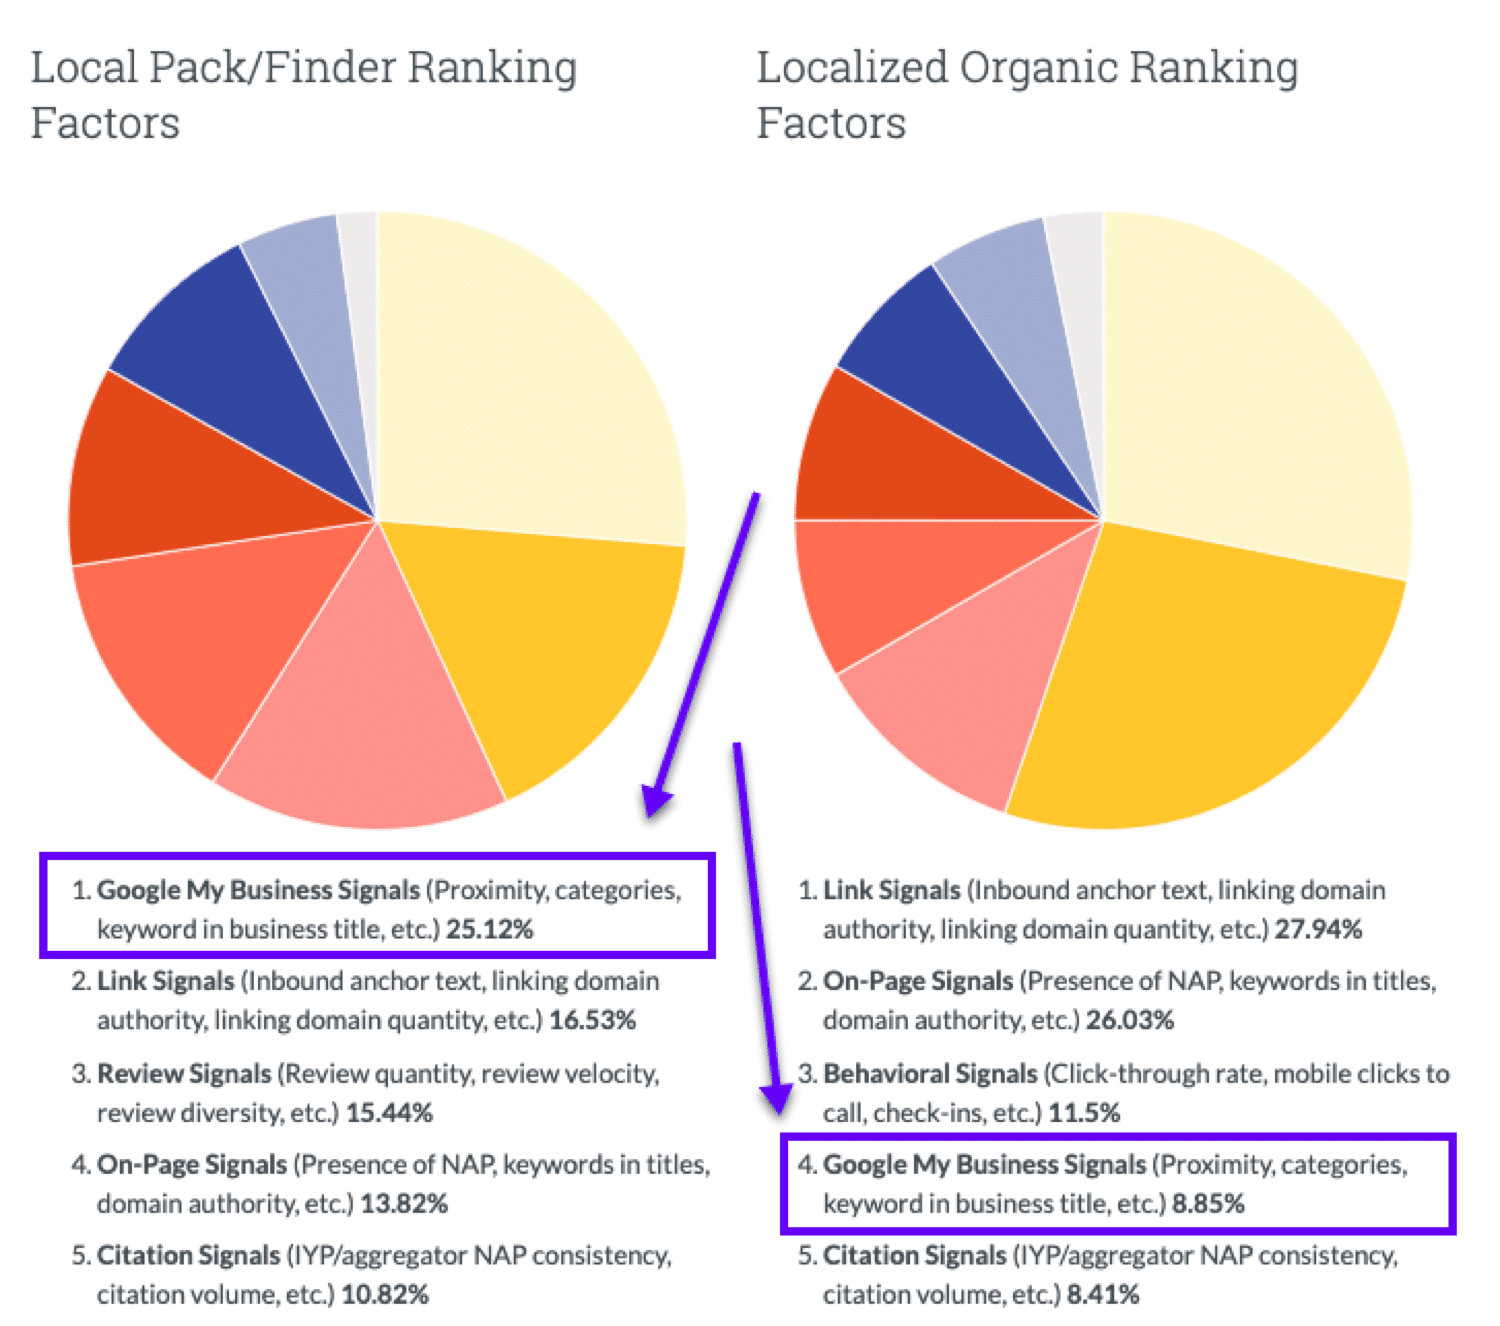 Lokale Packs (GMB) vs. lokale Bio-Ranking-Faktoren Studienergebnisse